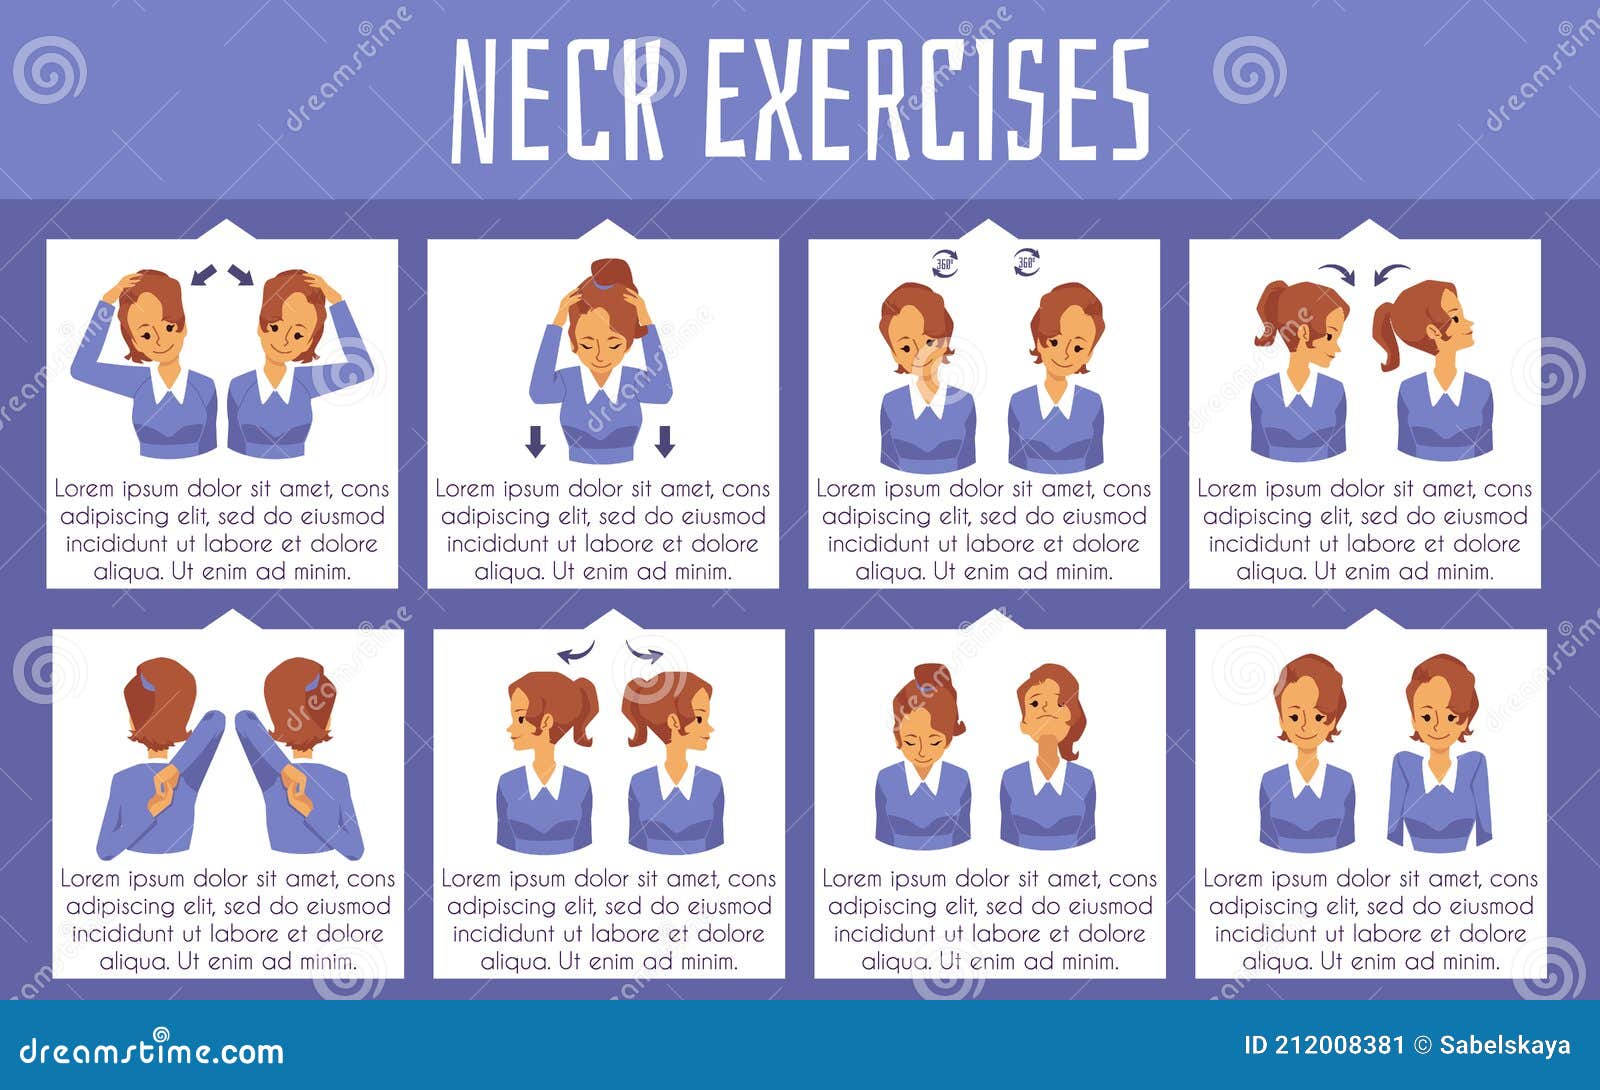 Exercises to Help Relieve Neck Pain